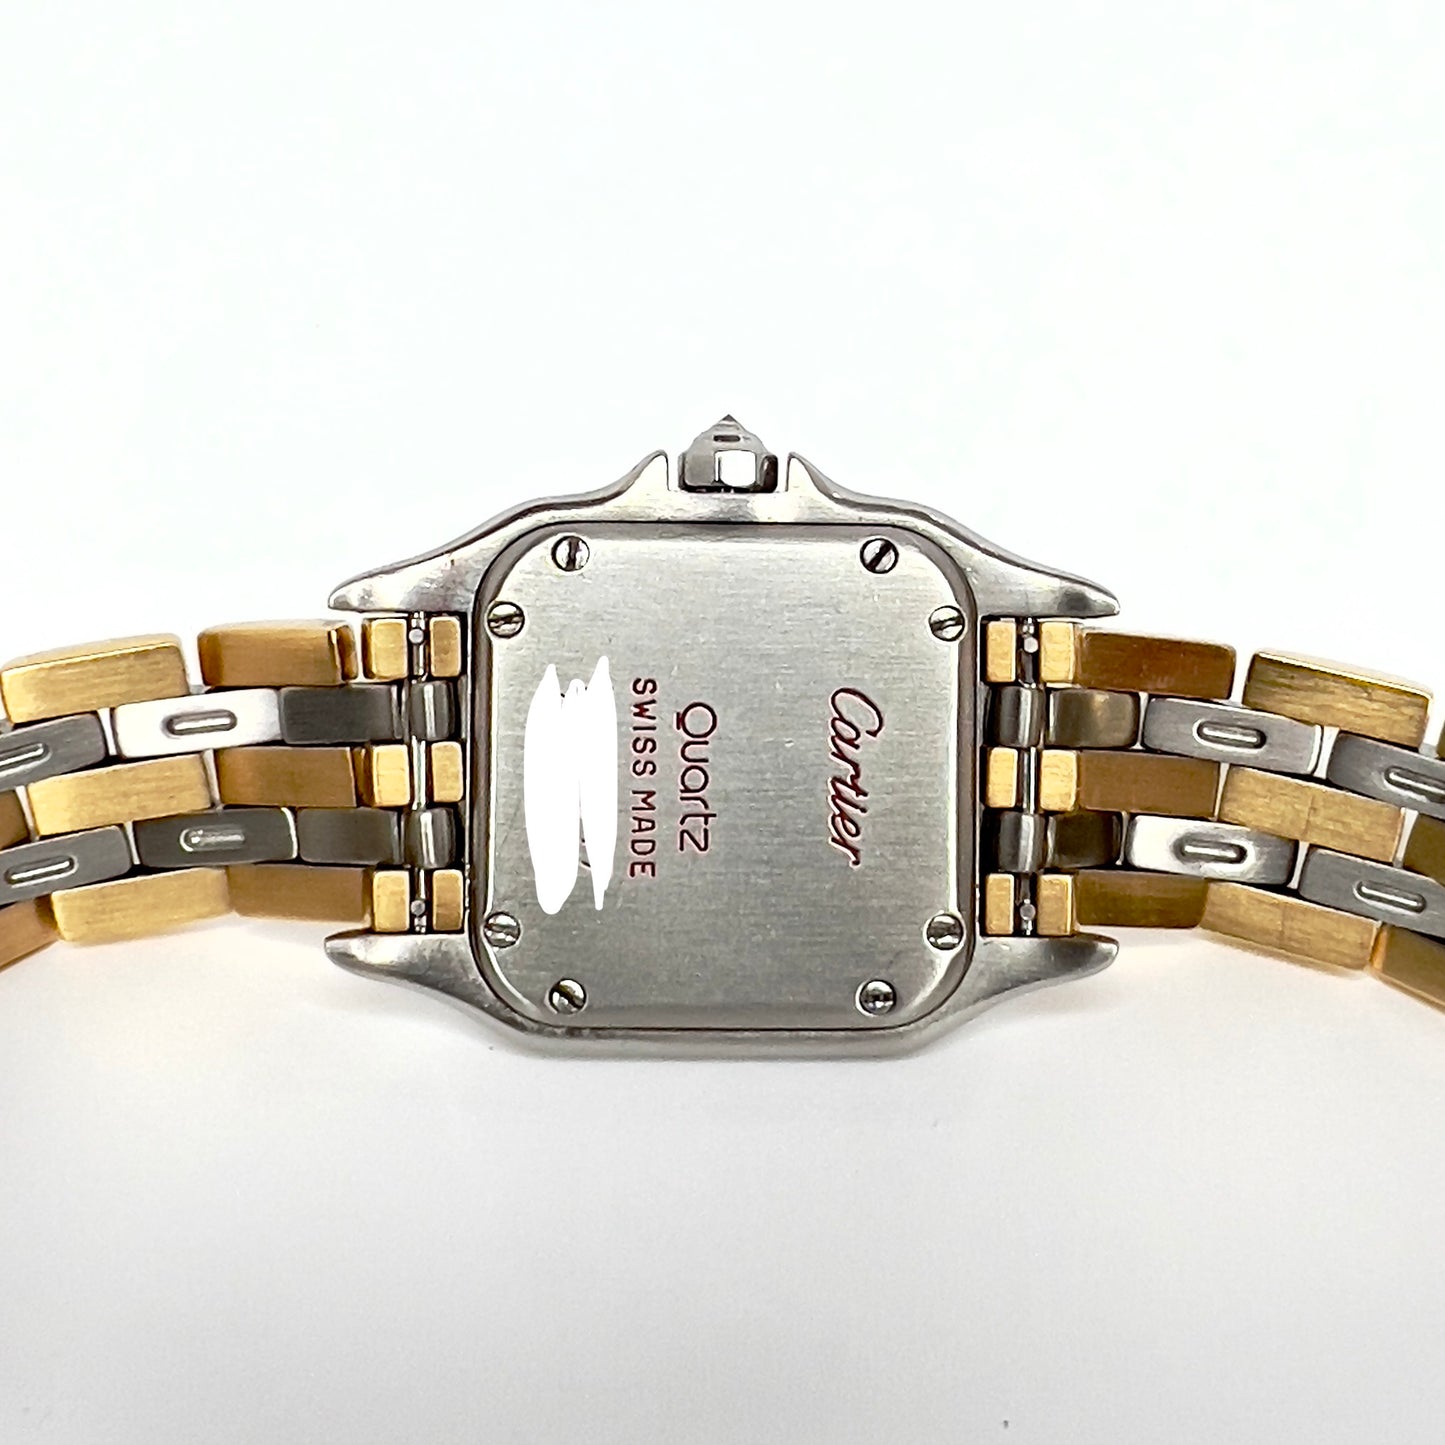 CARTIER PANTHERE Quartz 23mm 3 Row Gold ~1TCW DIAMOND Watch